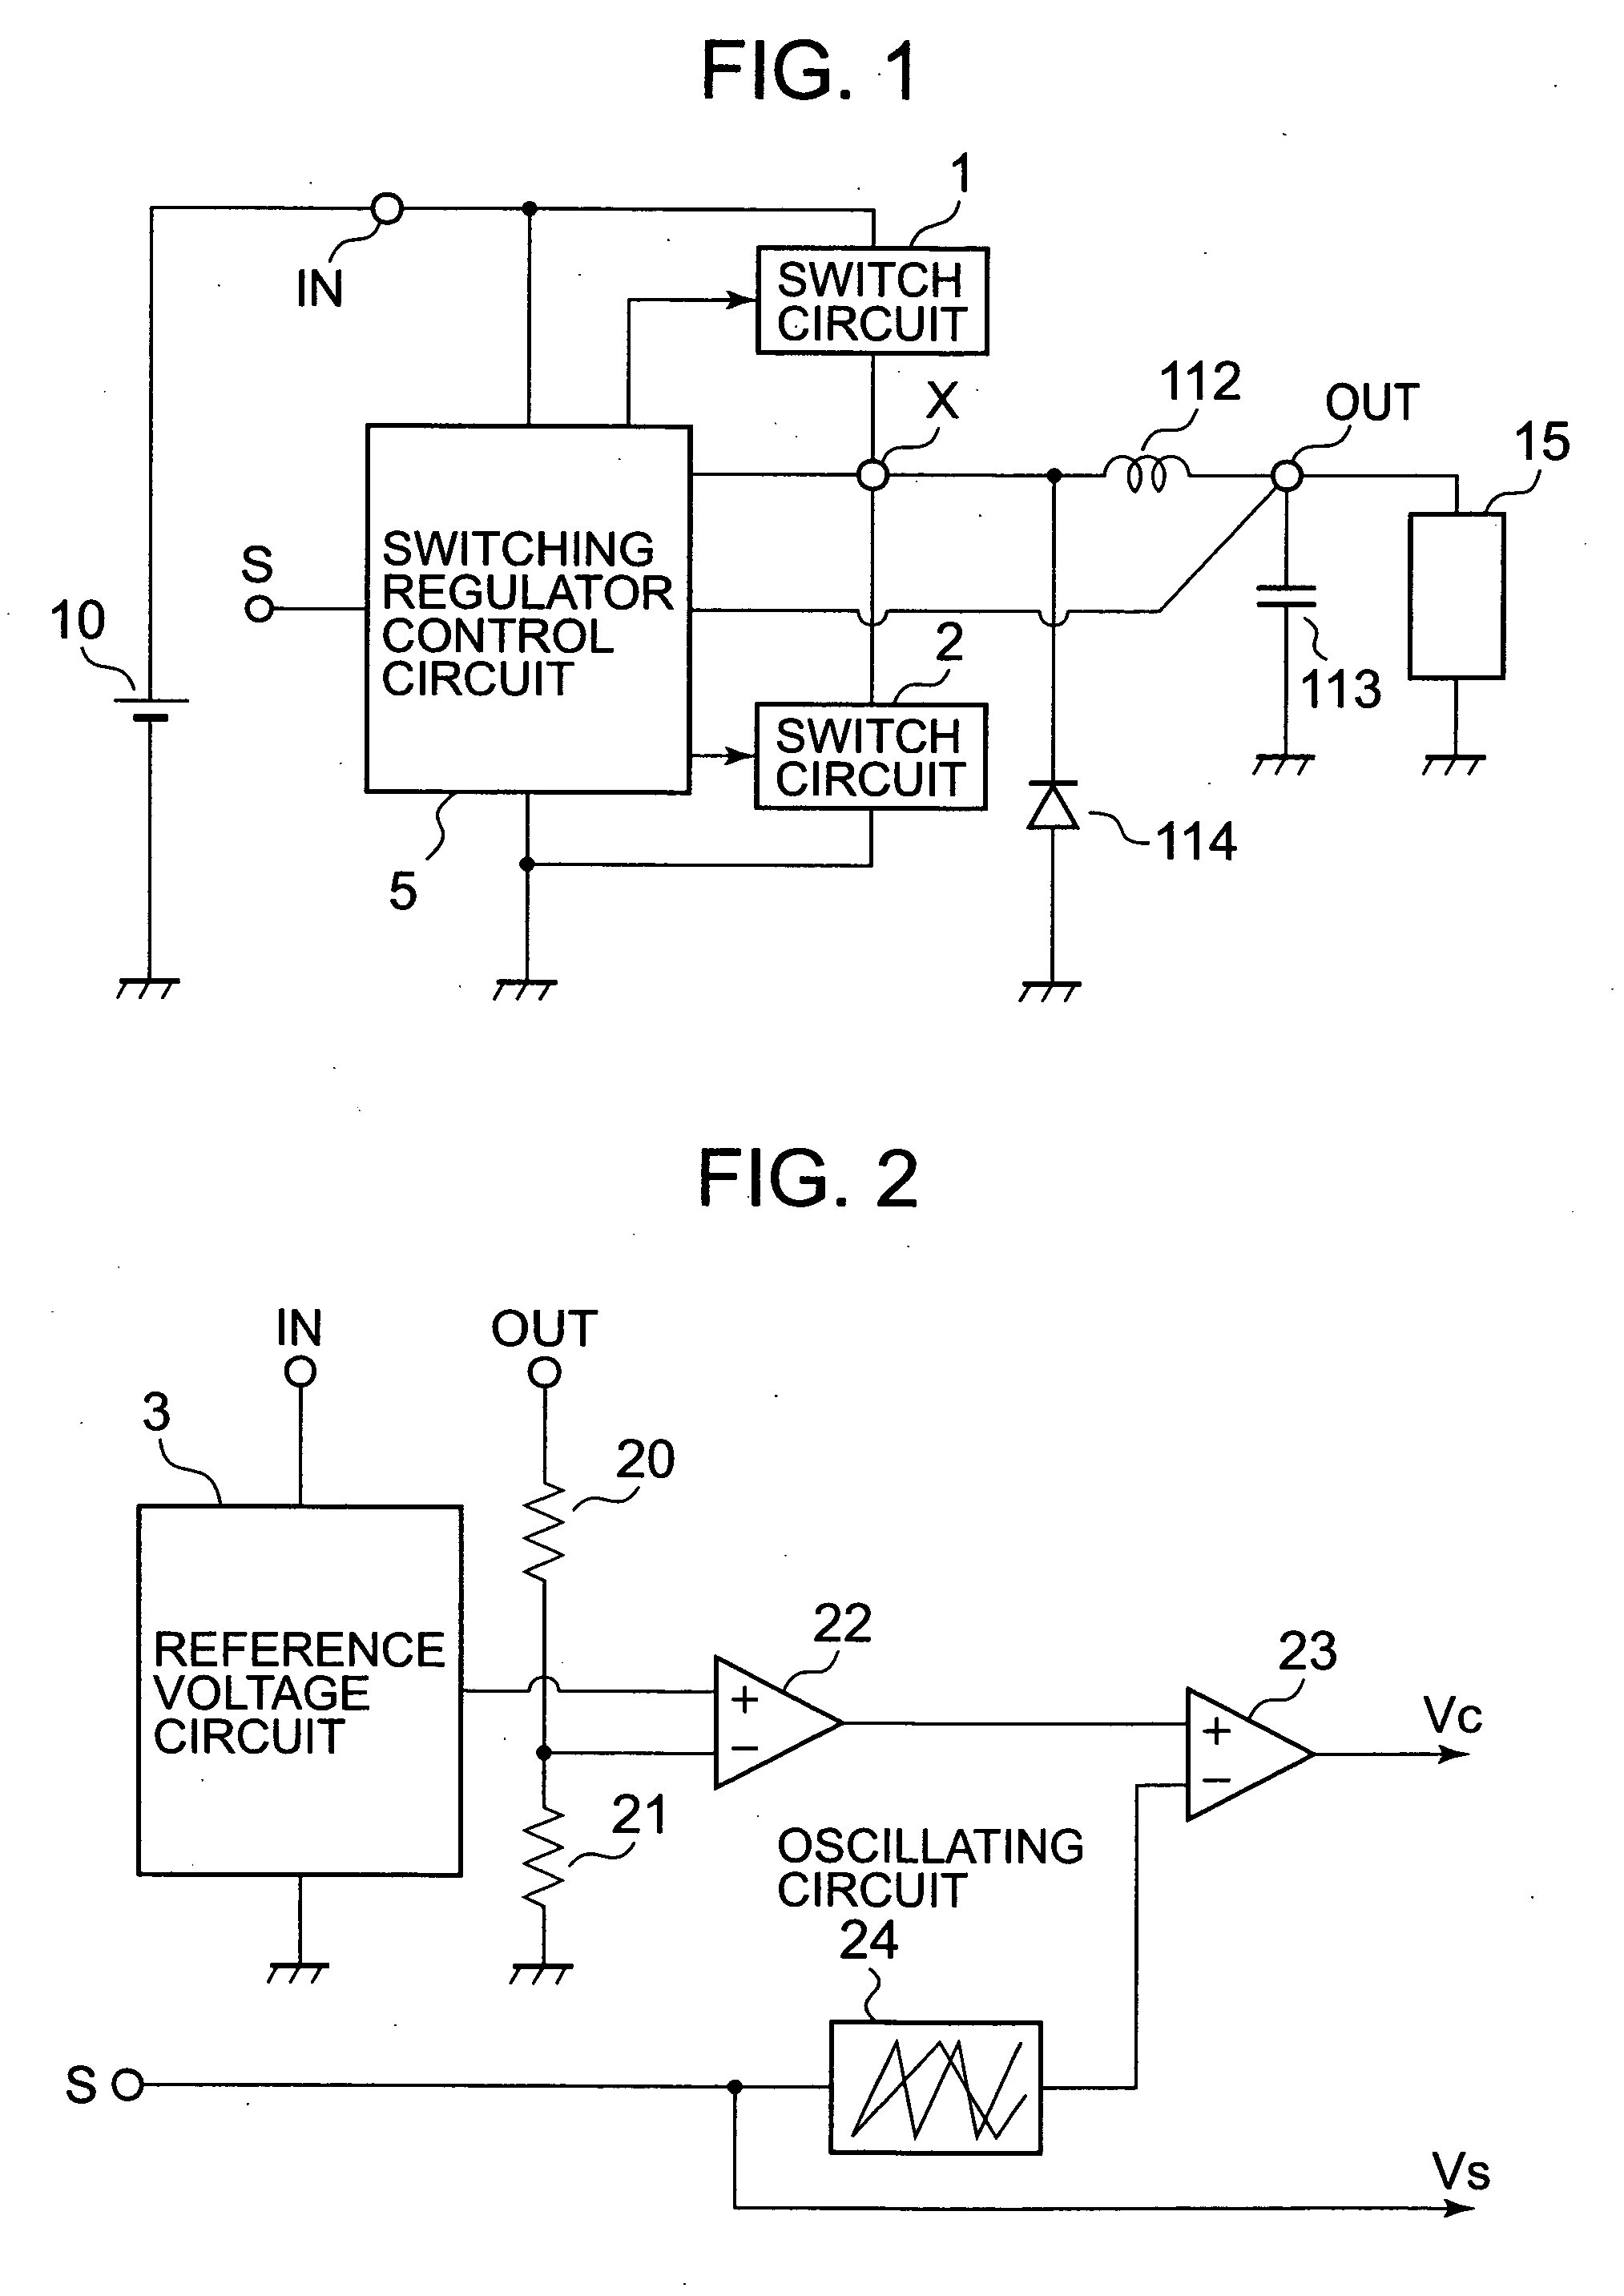 Switching regulator circuit